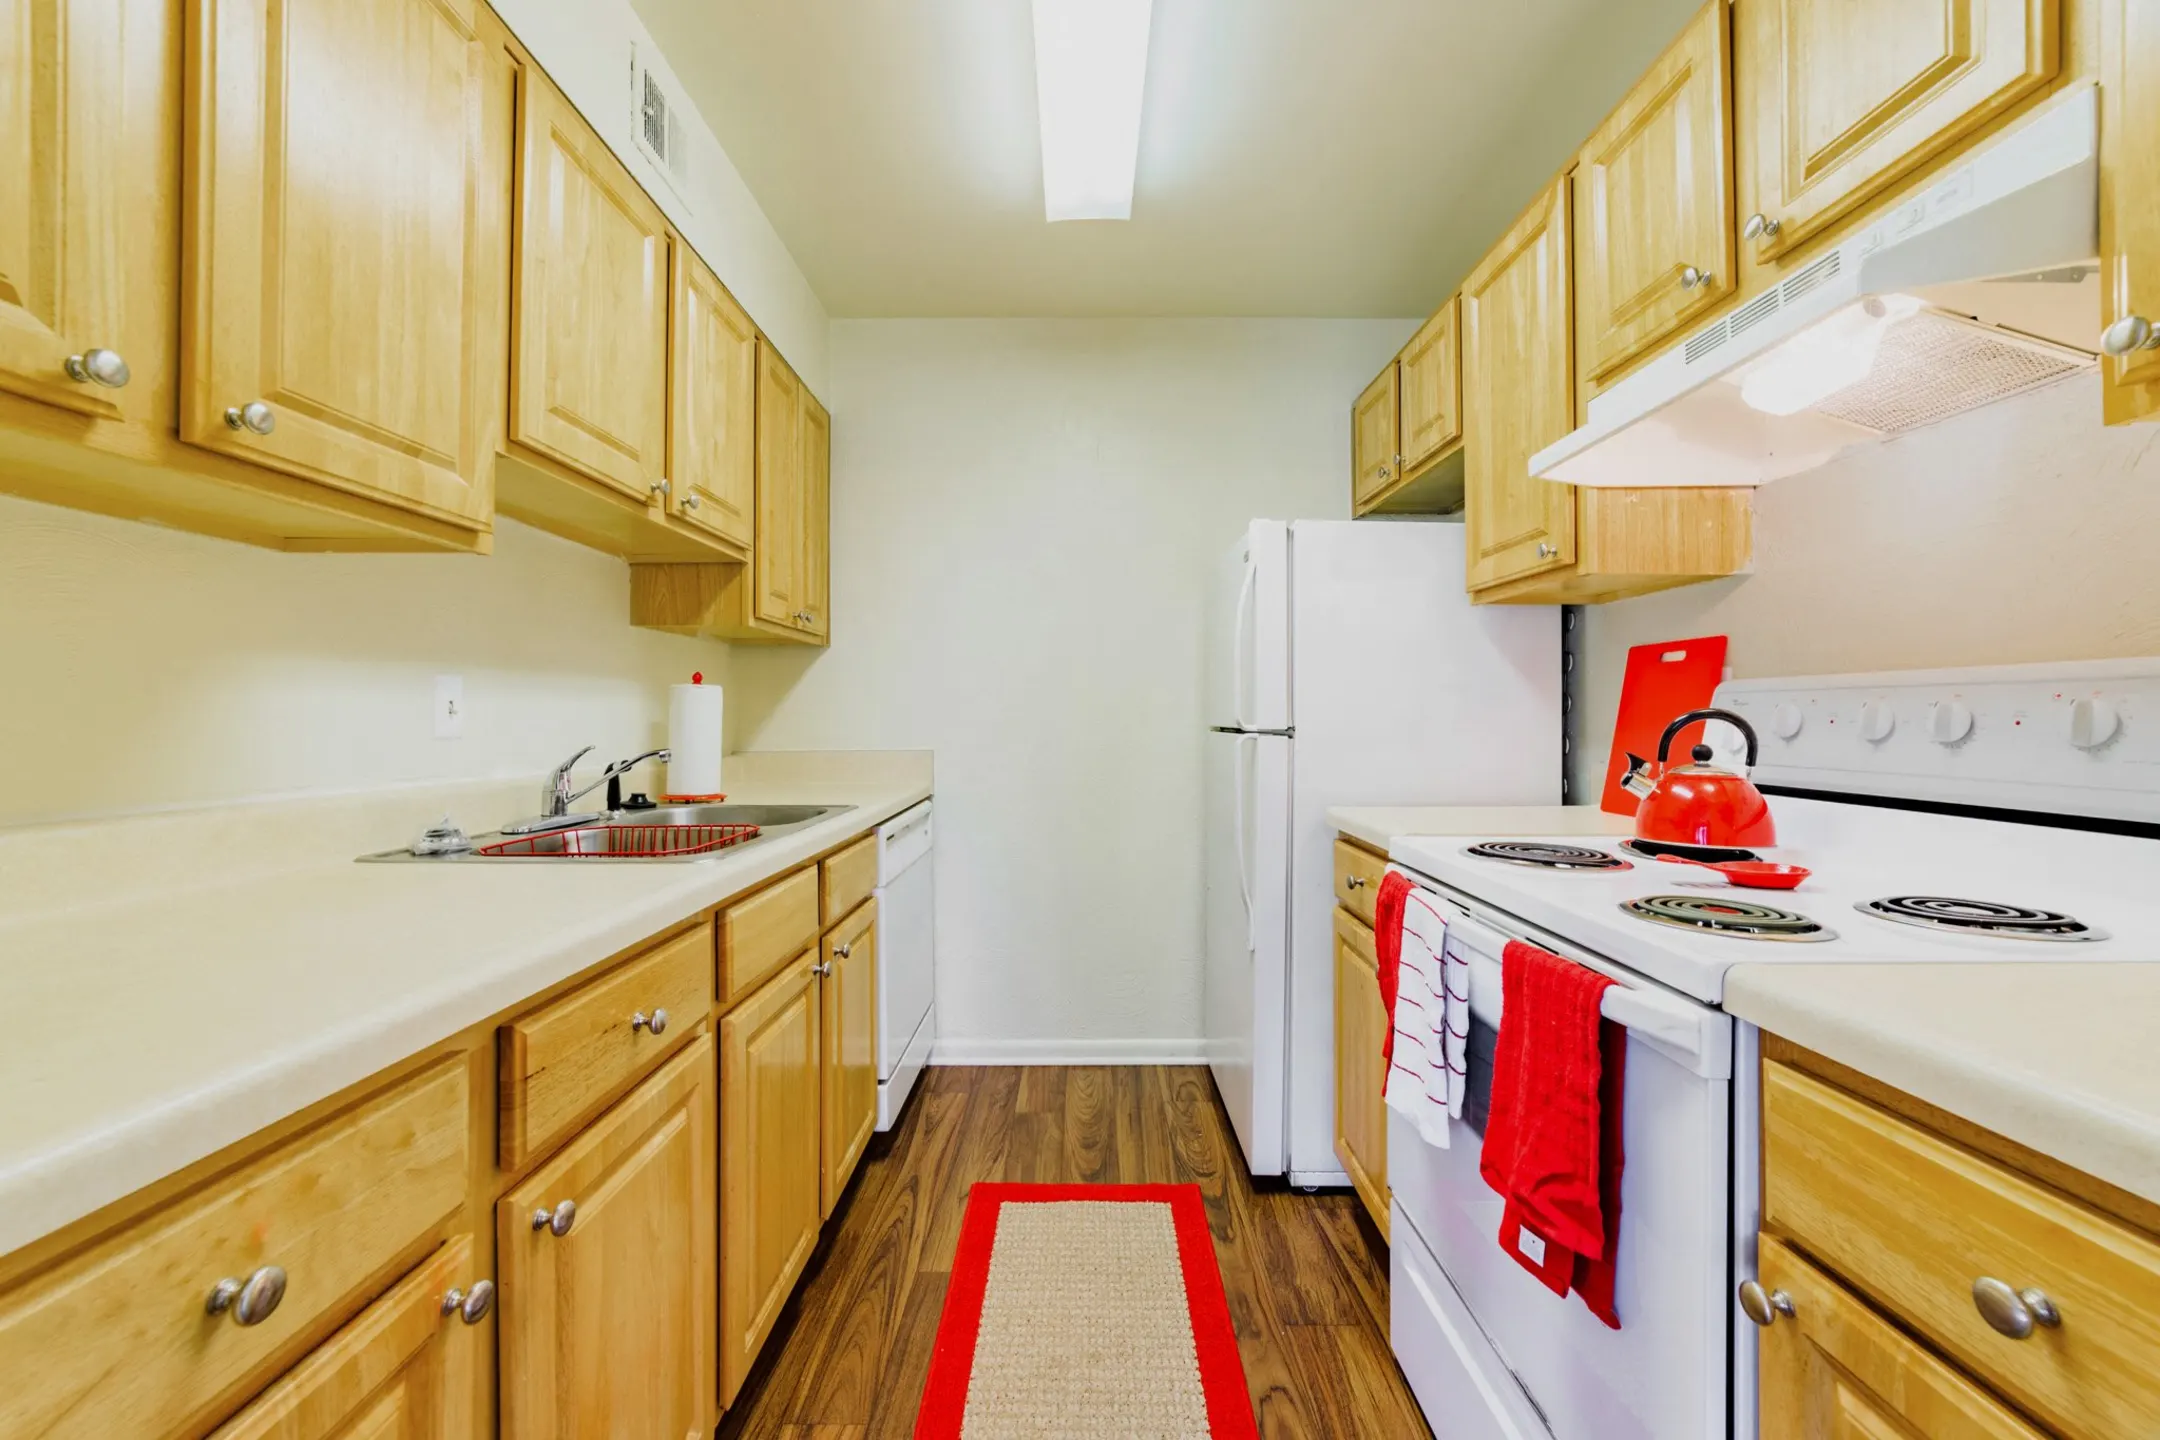 Kitchen - Woodscape Apartments - Newport News, VA